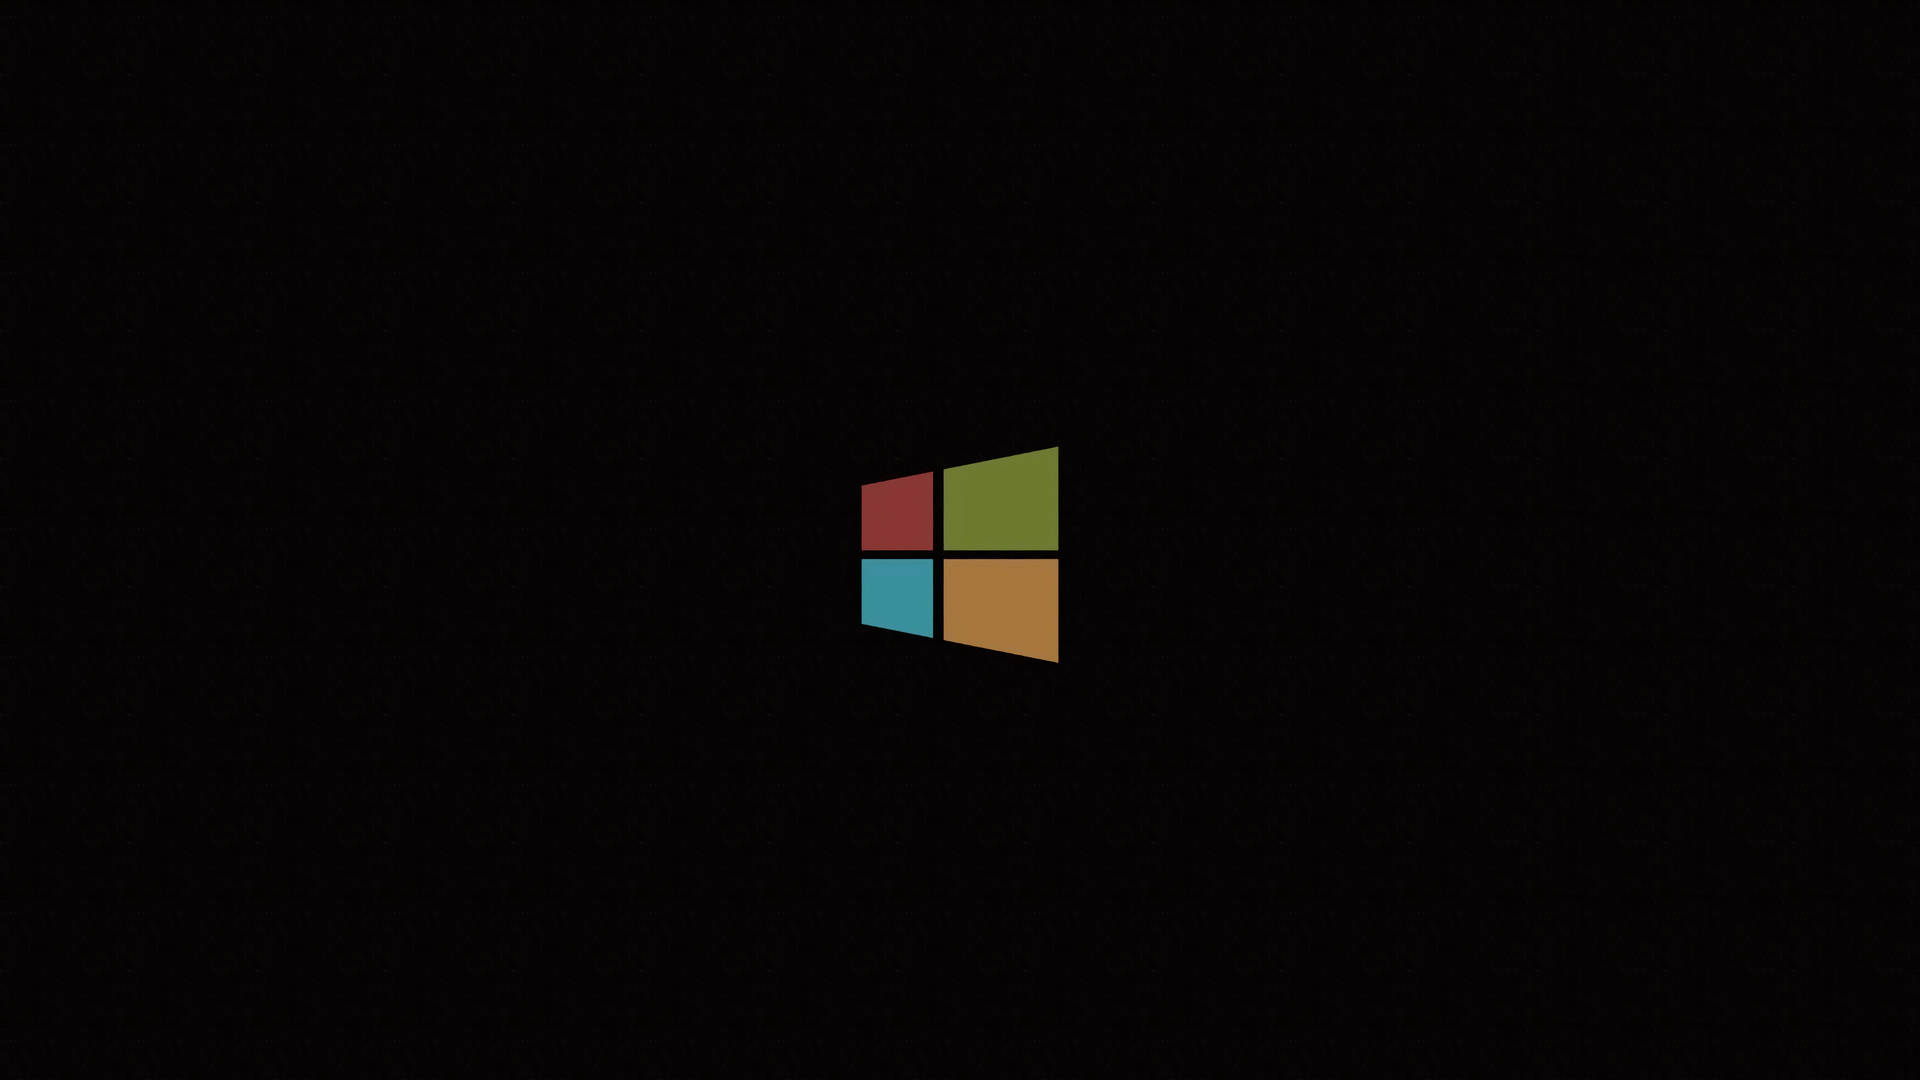 Download Windows 10 Minimalist Logo Wallpaper 